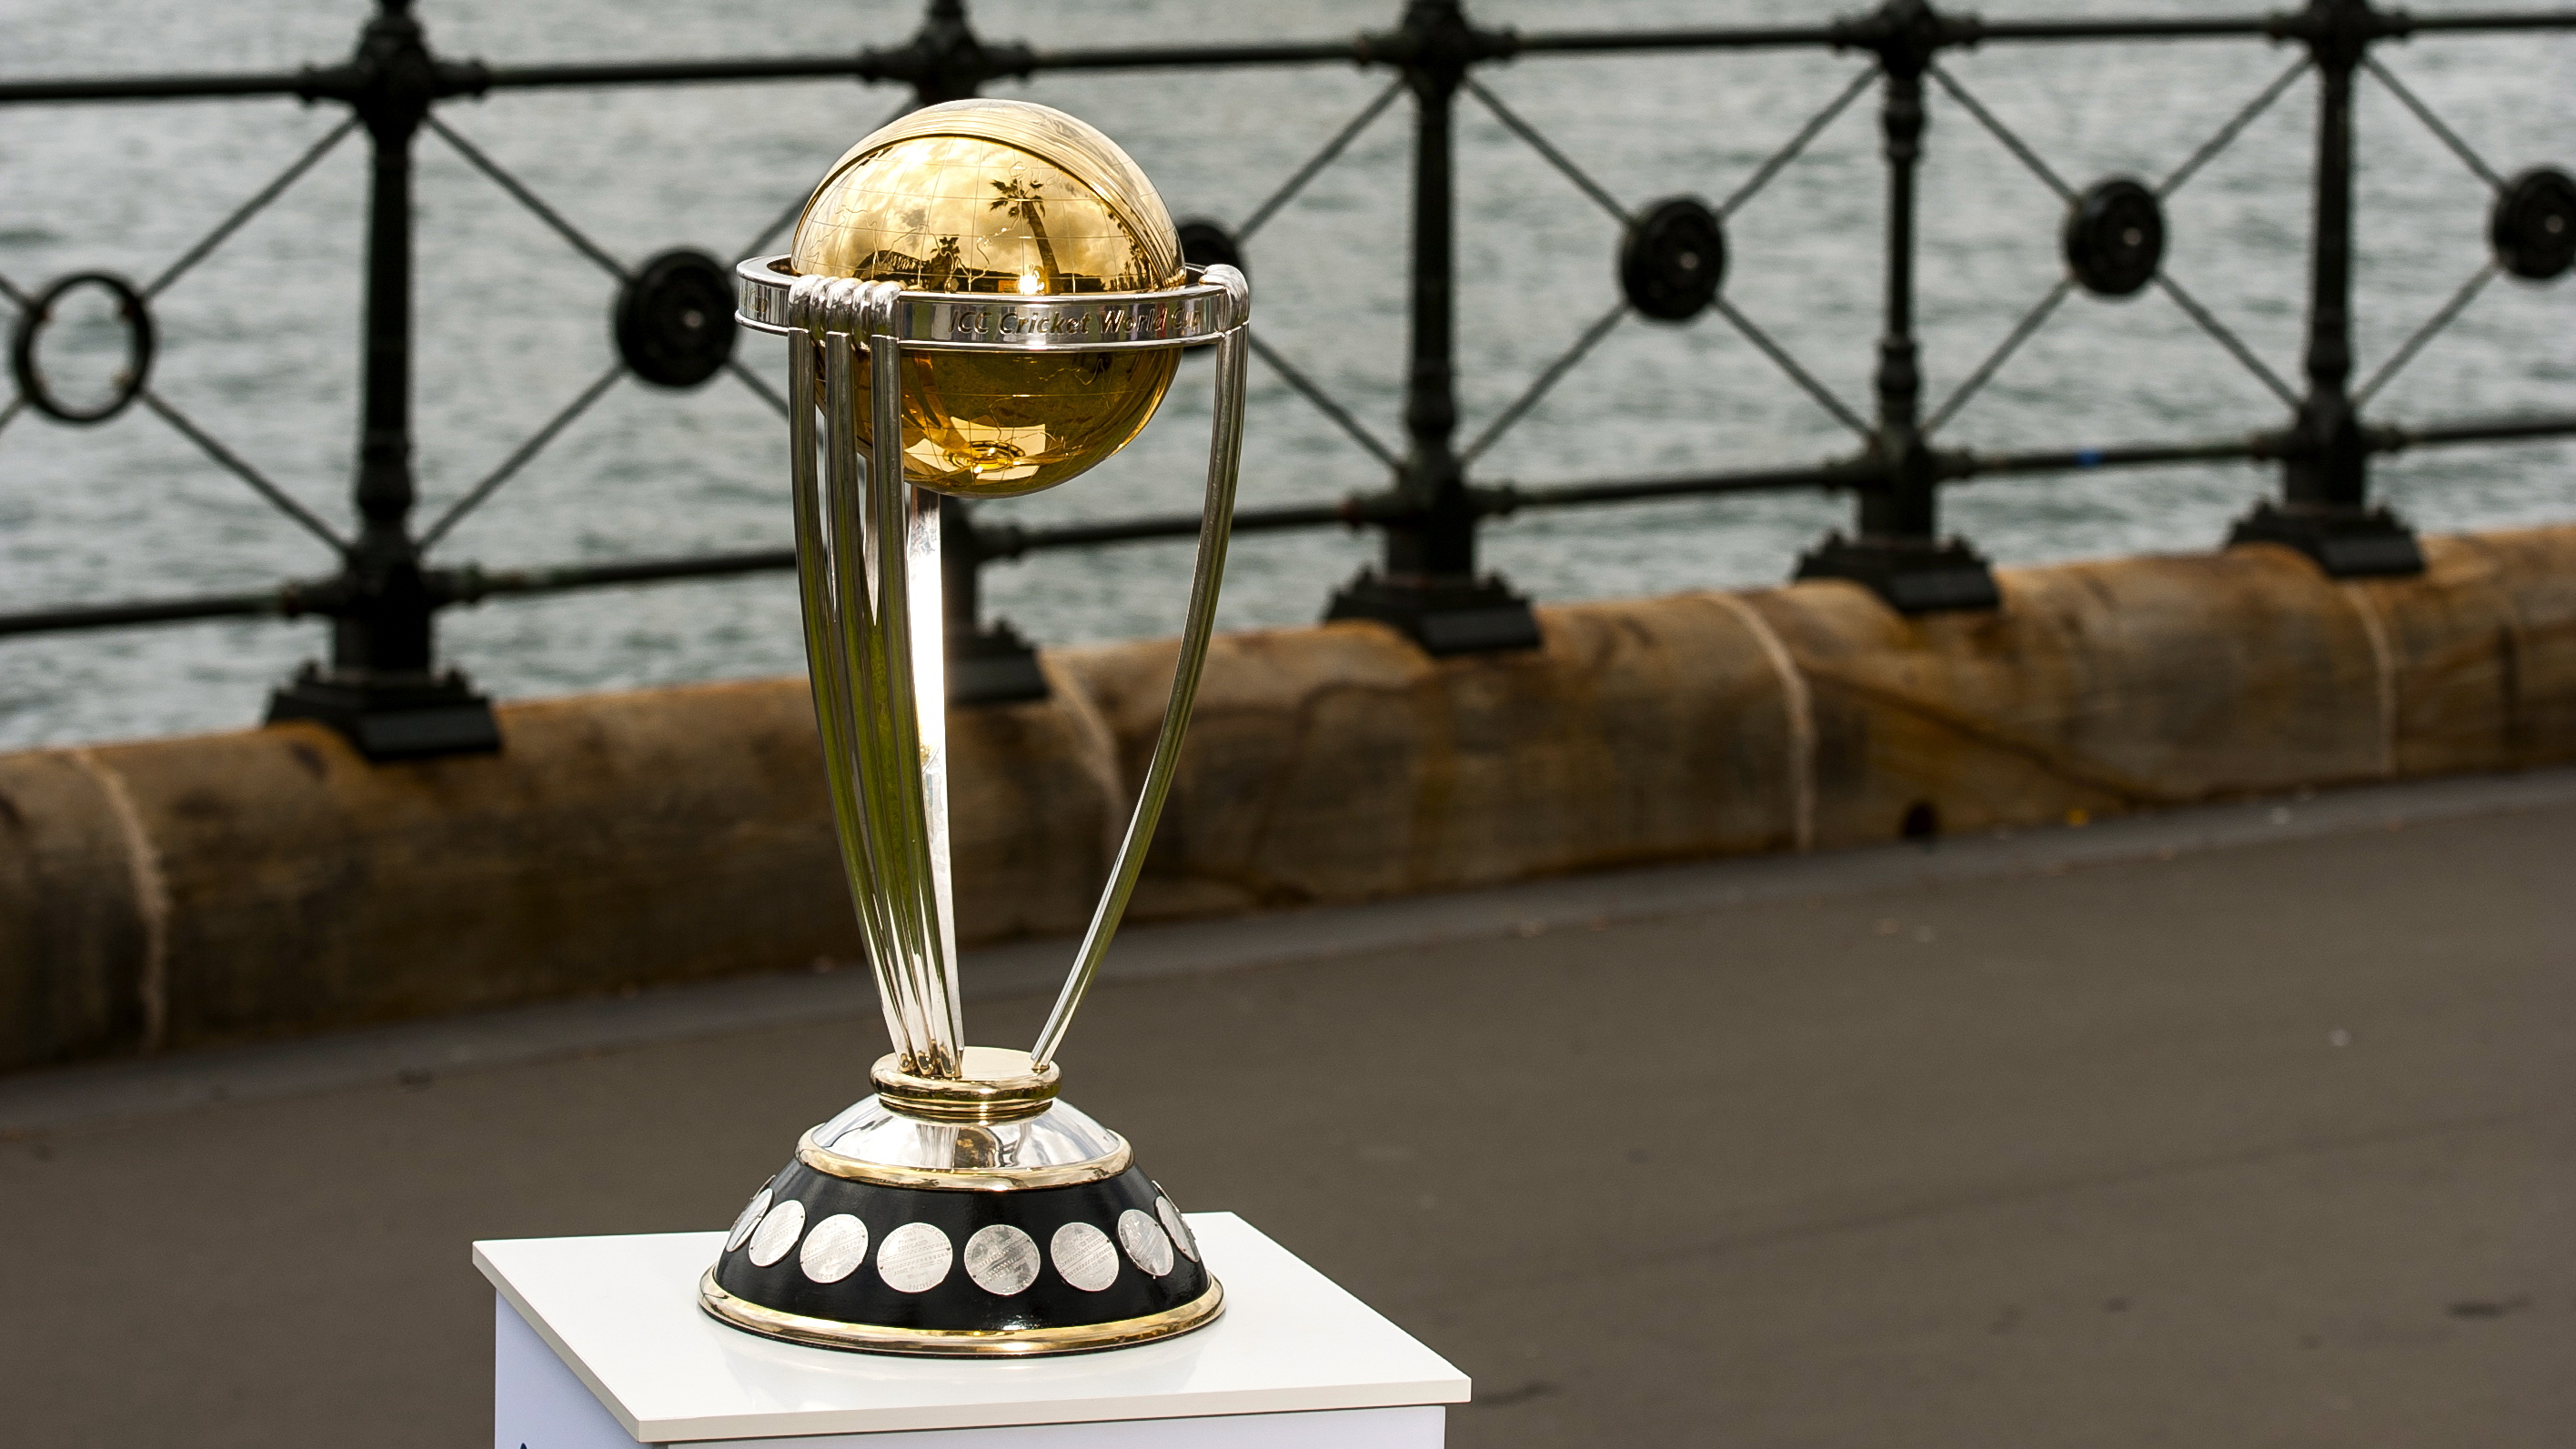 icc cricket world cup 2015